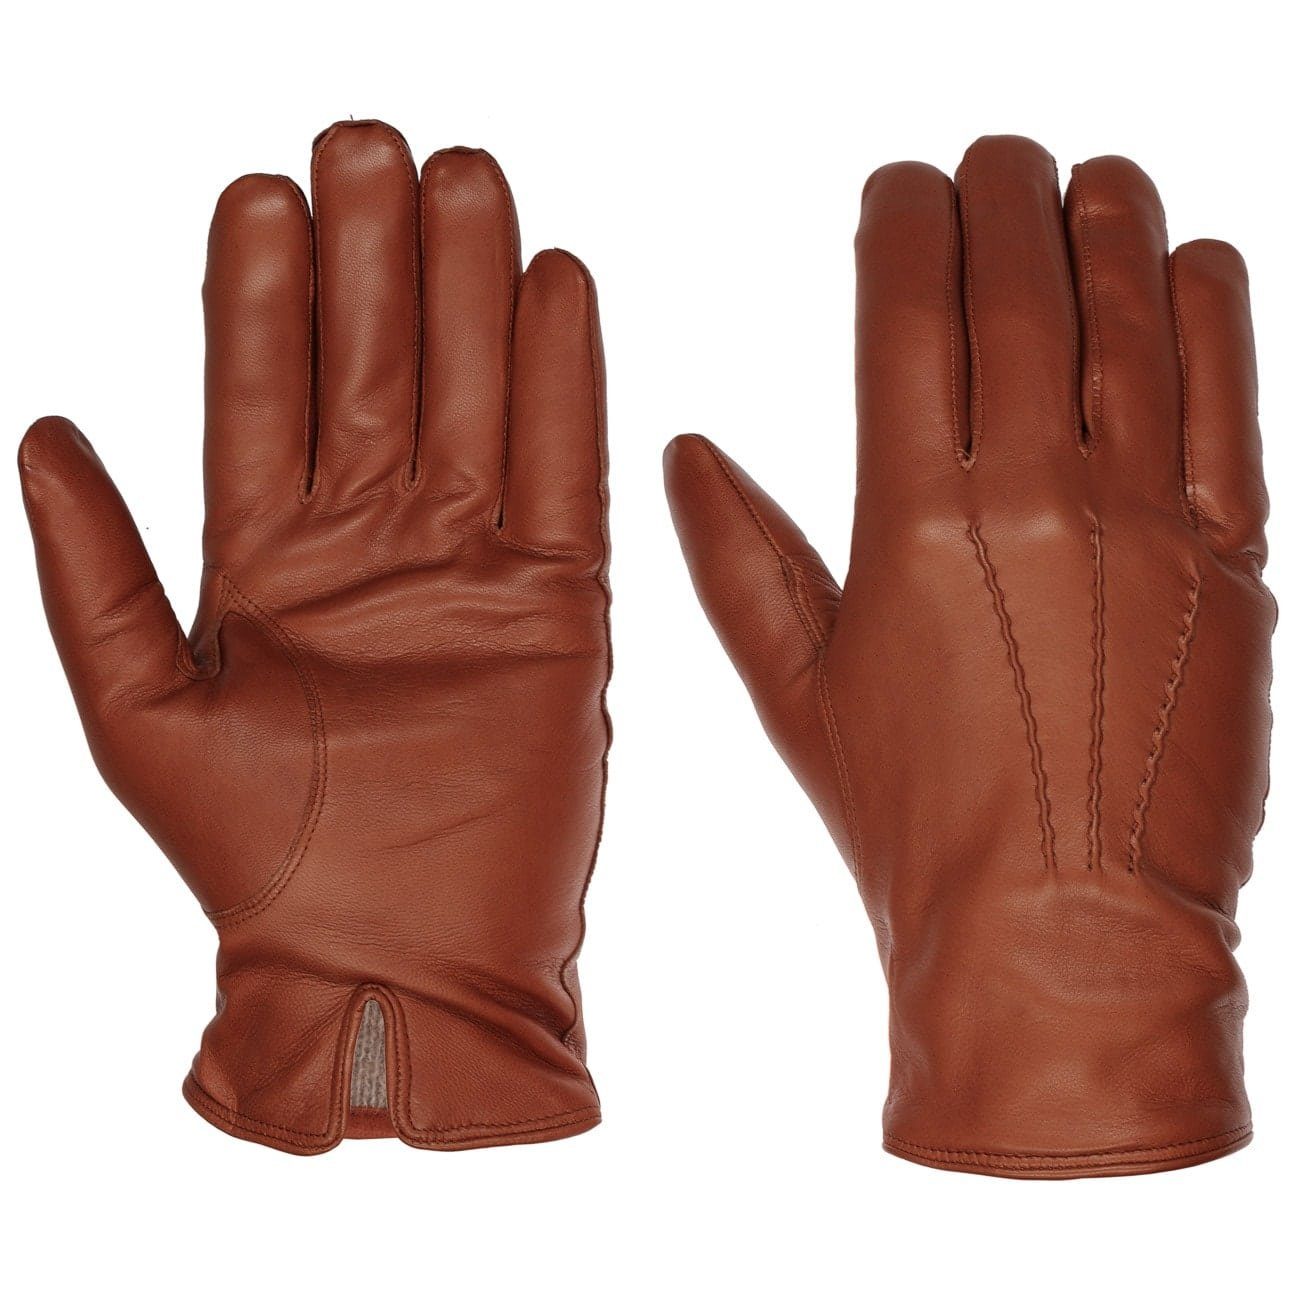 Caridei Lederhandschuhe Fingerhandschuhe mit Futter, Made in Italy braun